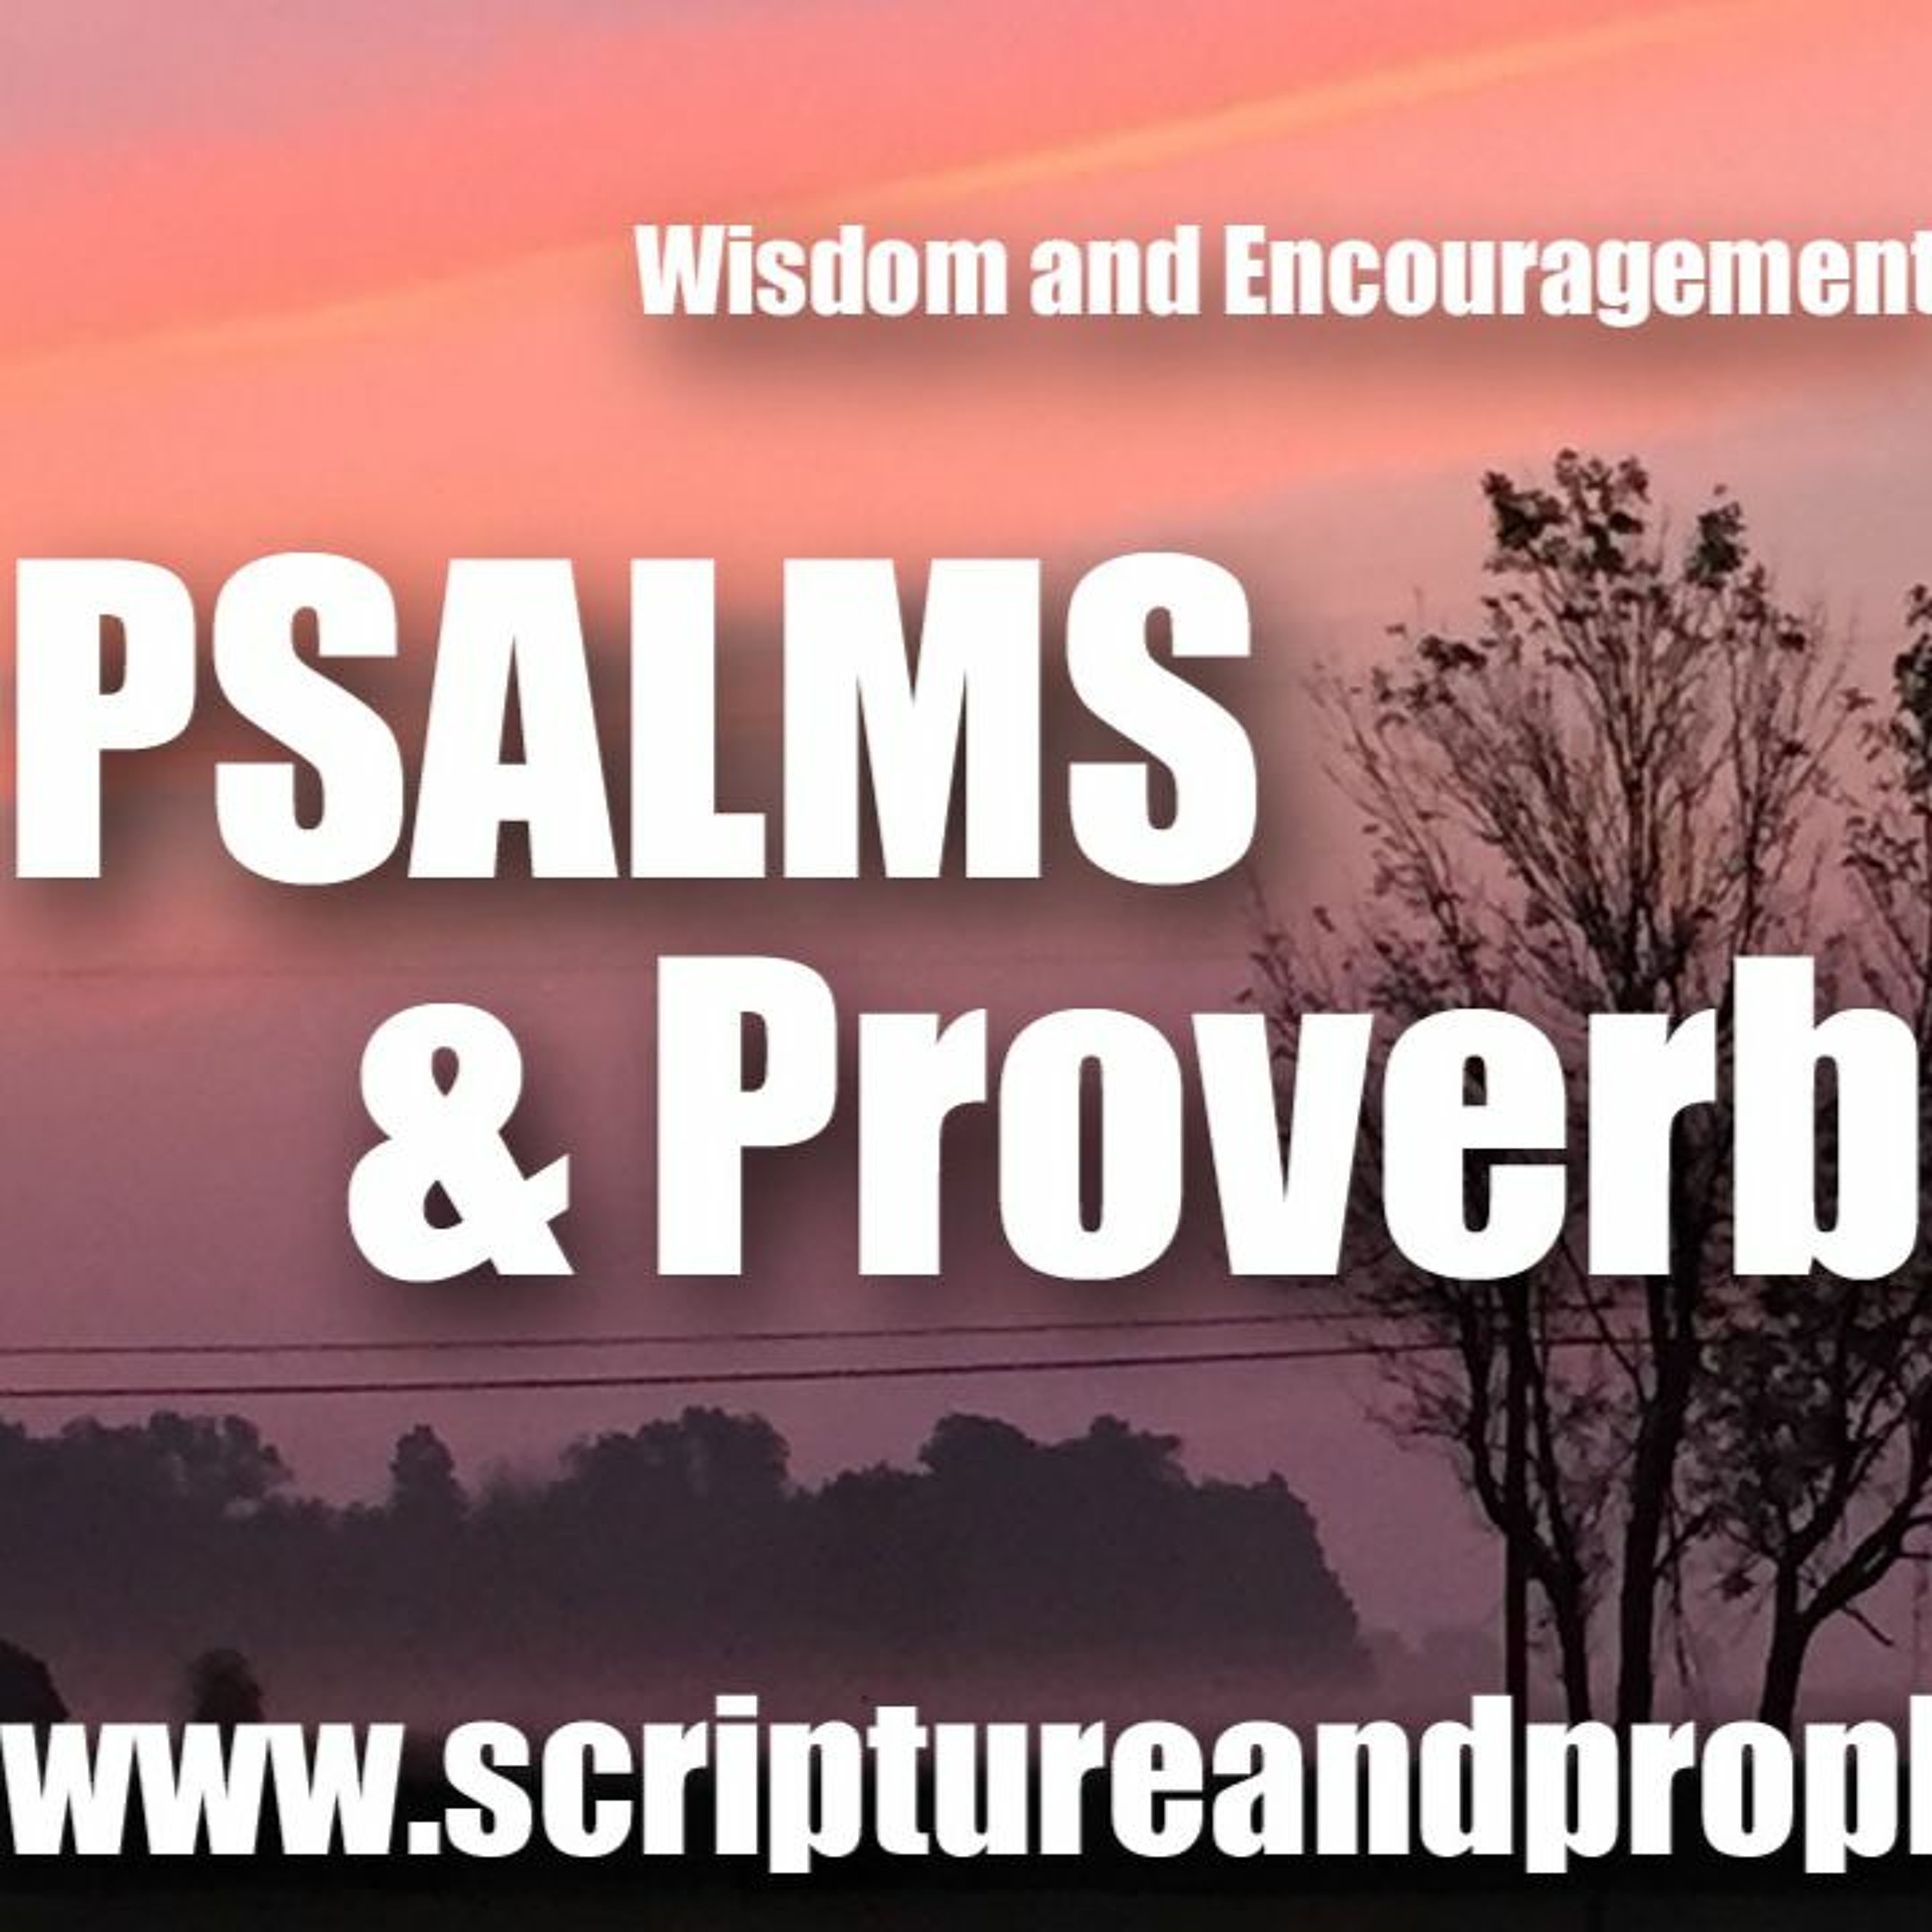 Wisdom From Psalm 9, Proverbs 14, & Wisdom 8: True Wisdom Only Comes From God